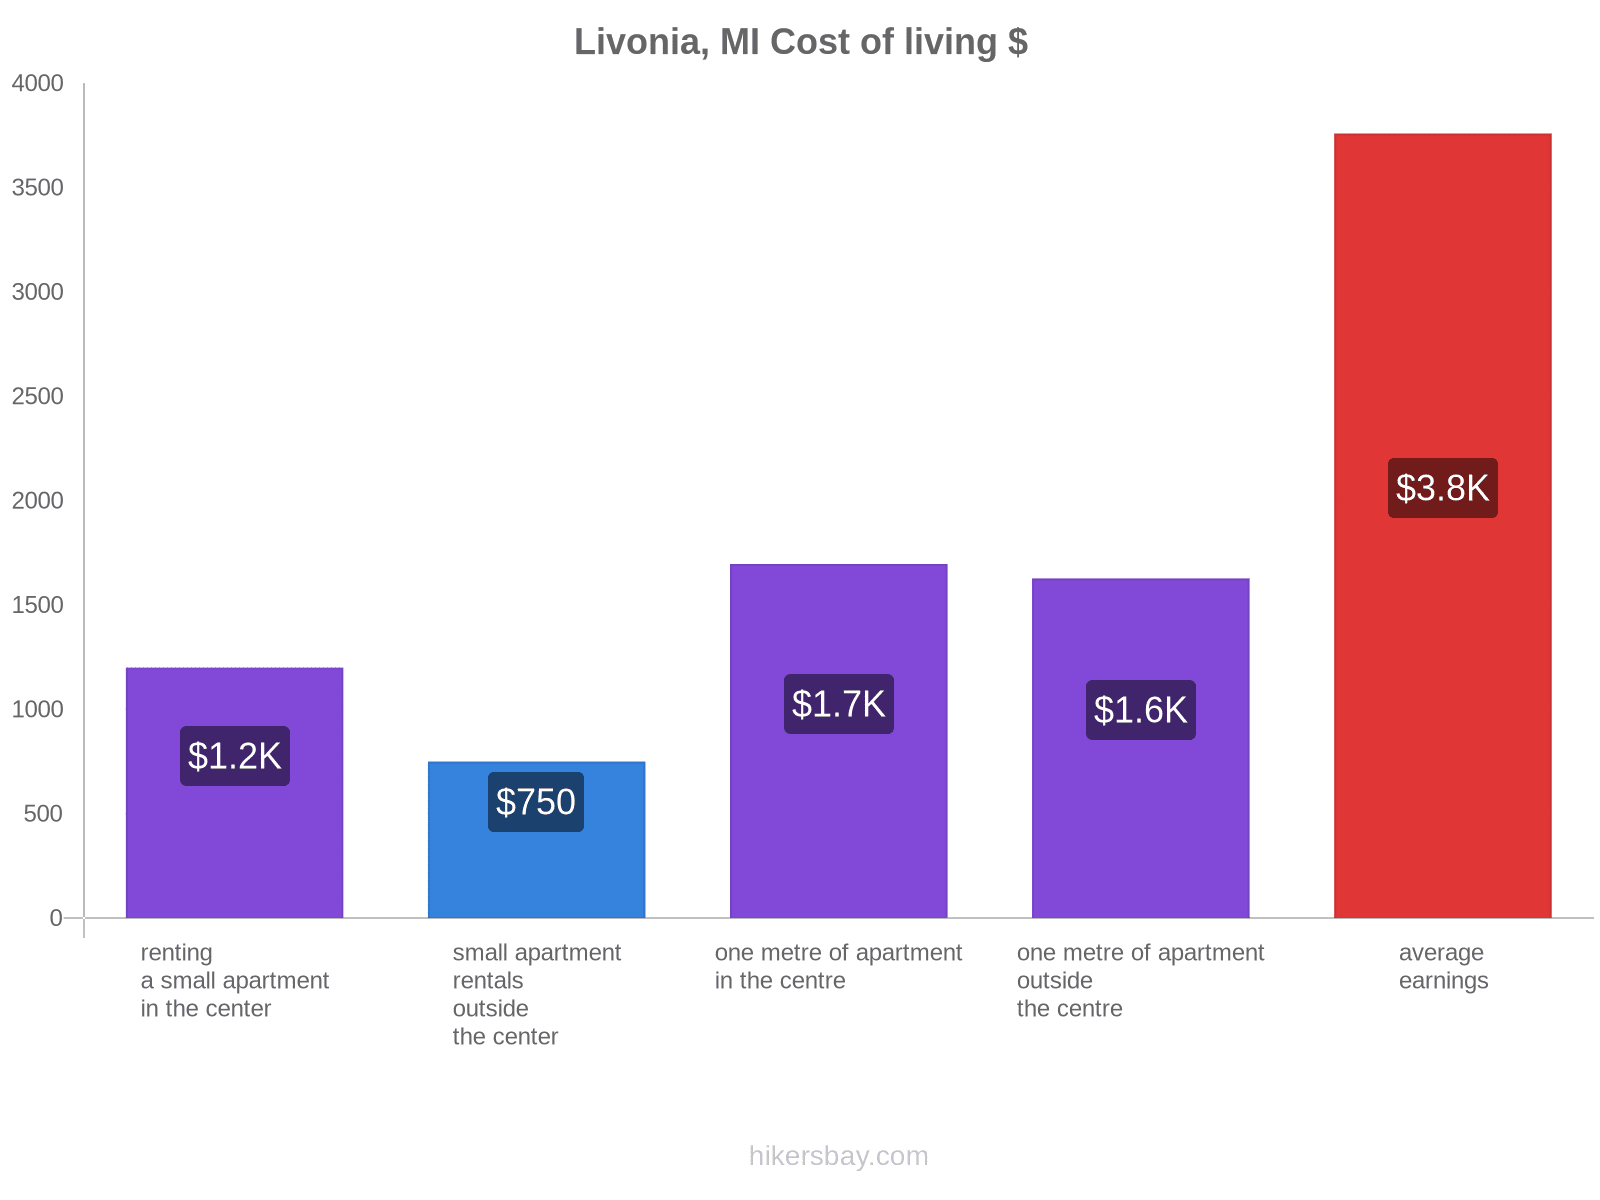 Livonia, MI cost of living hikersbay.com